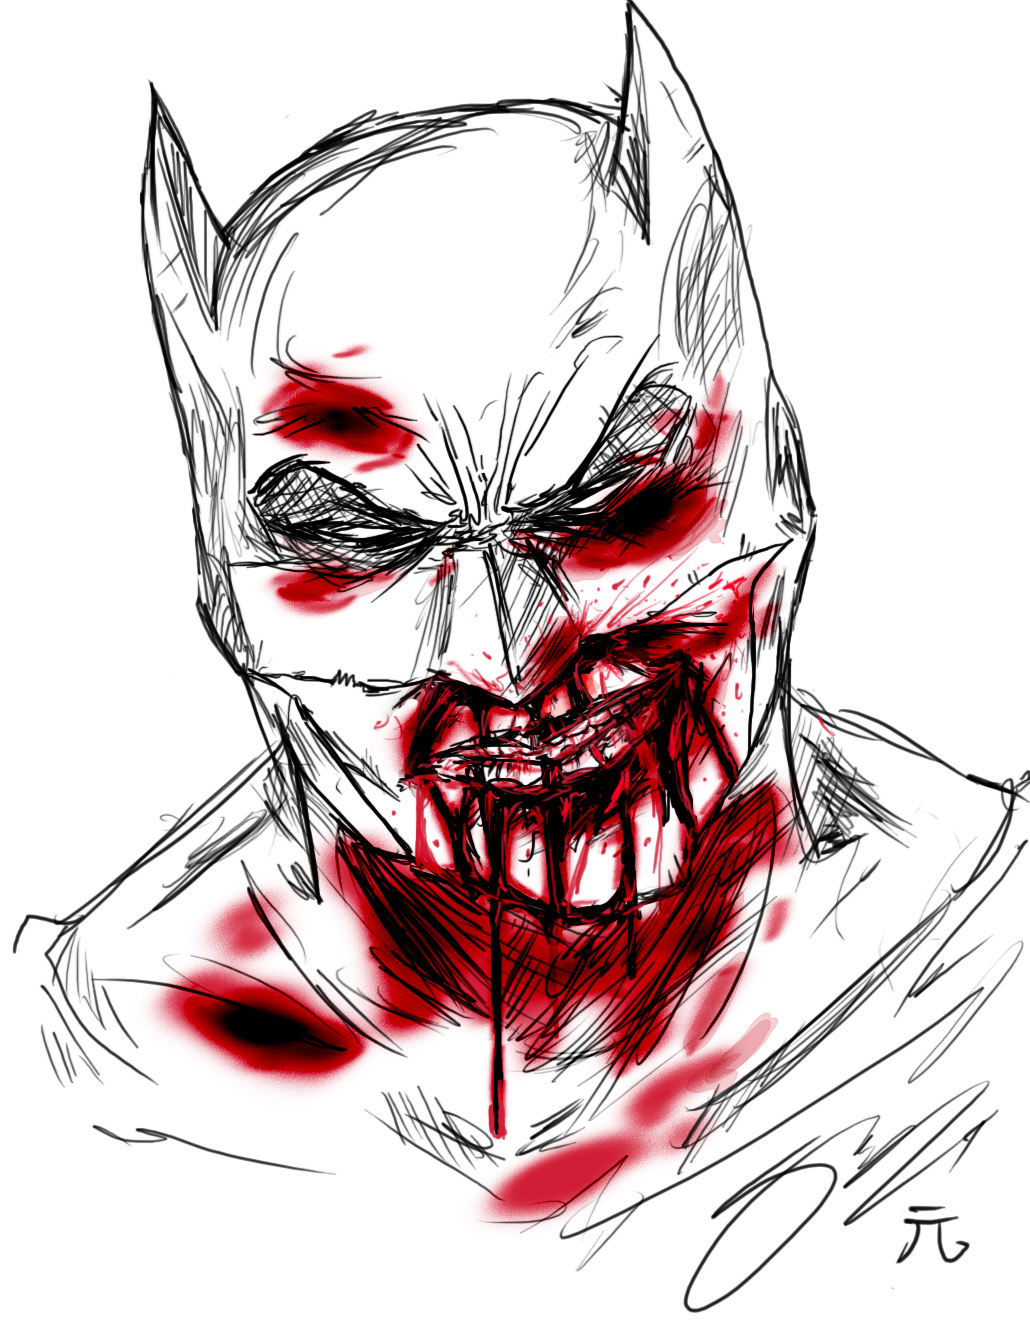 Batman bleeding with a grin by gentatsu9 on DeviantArt